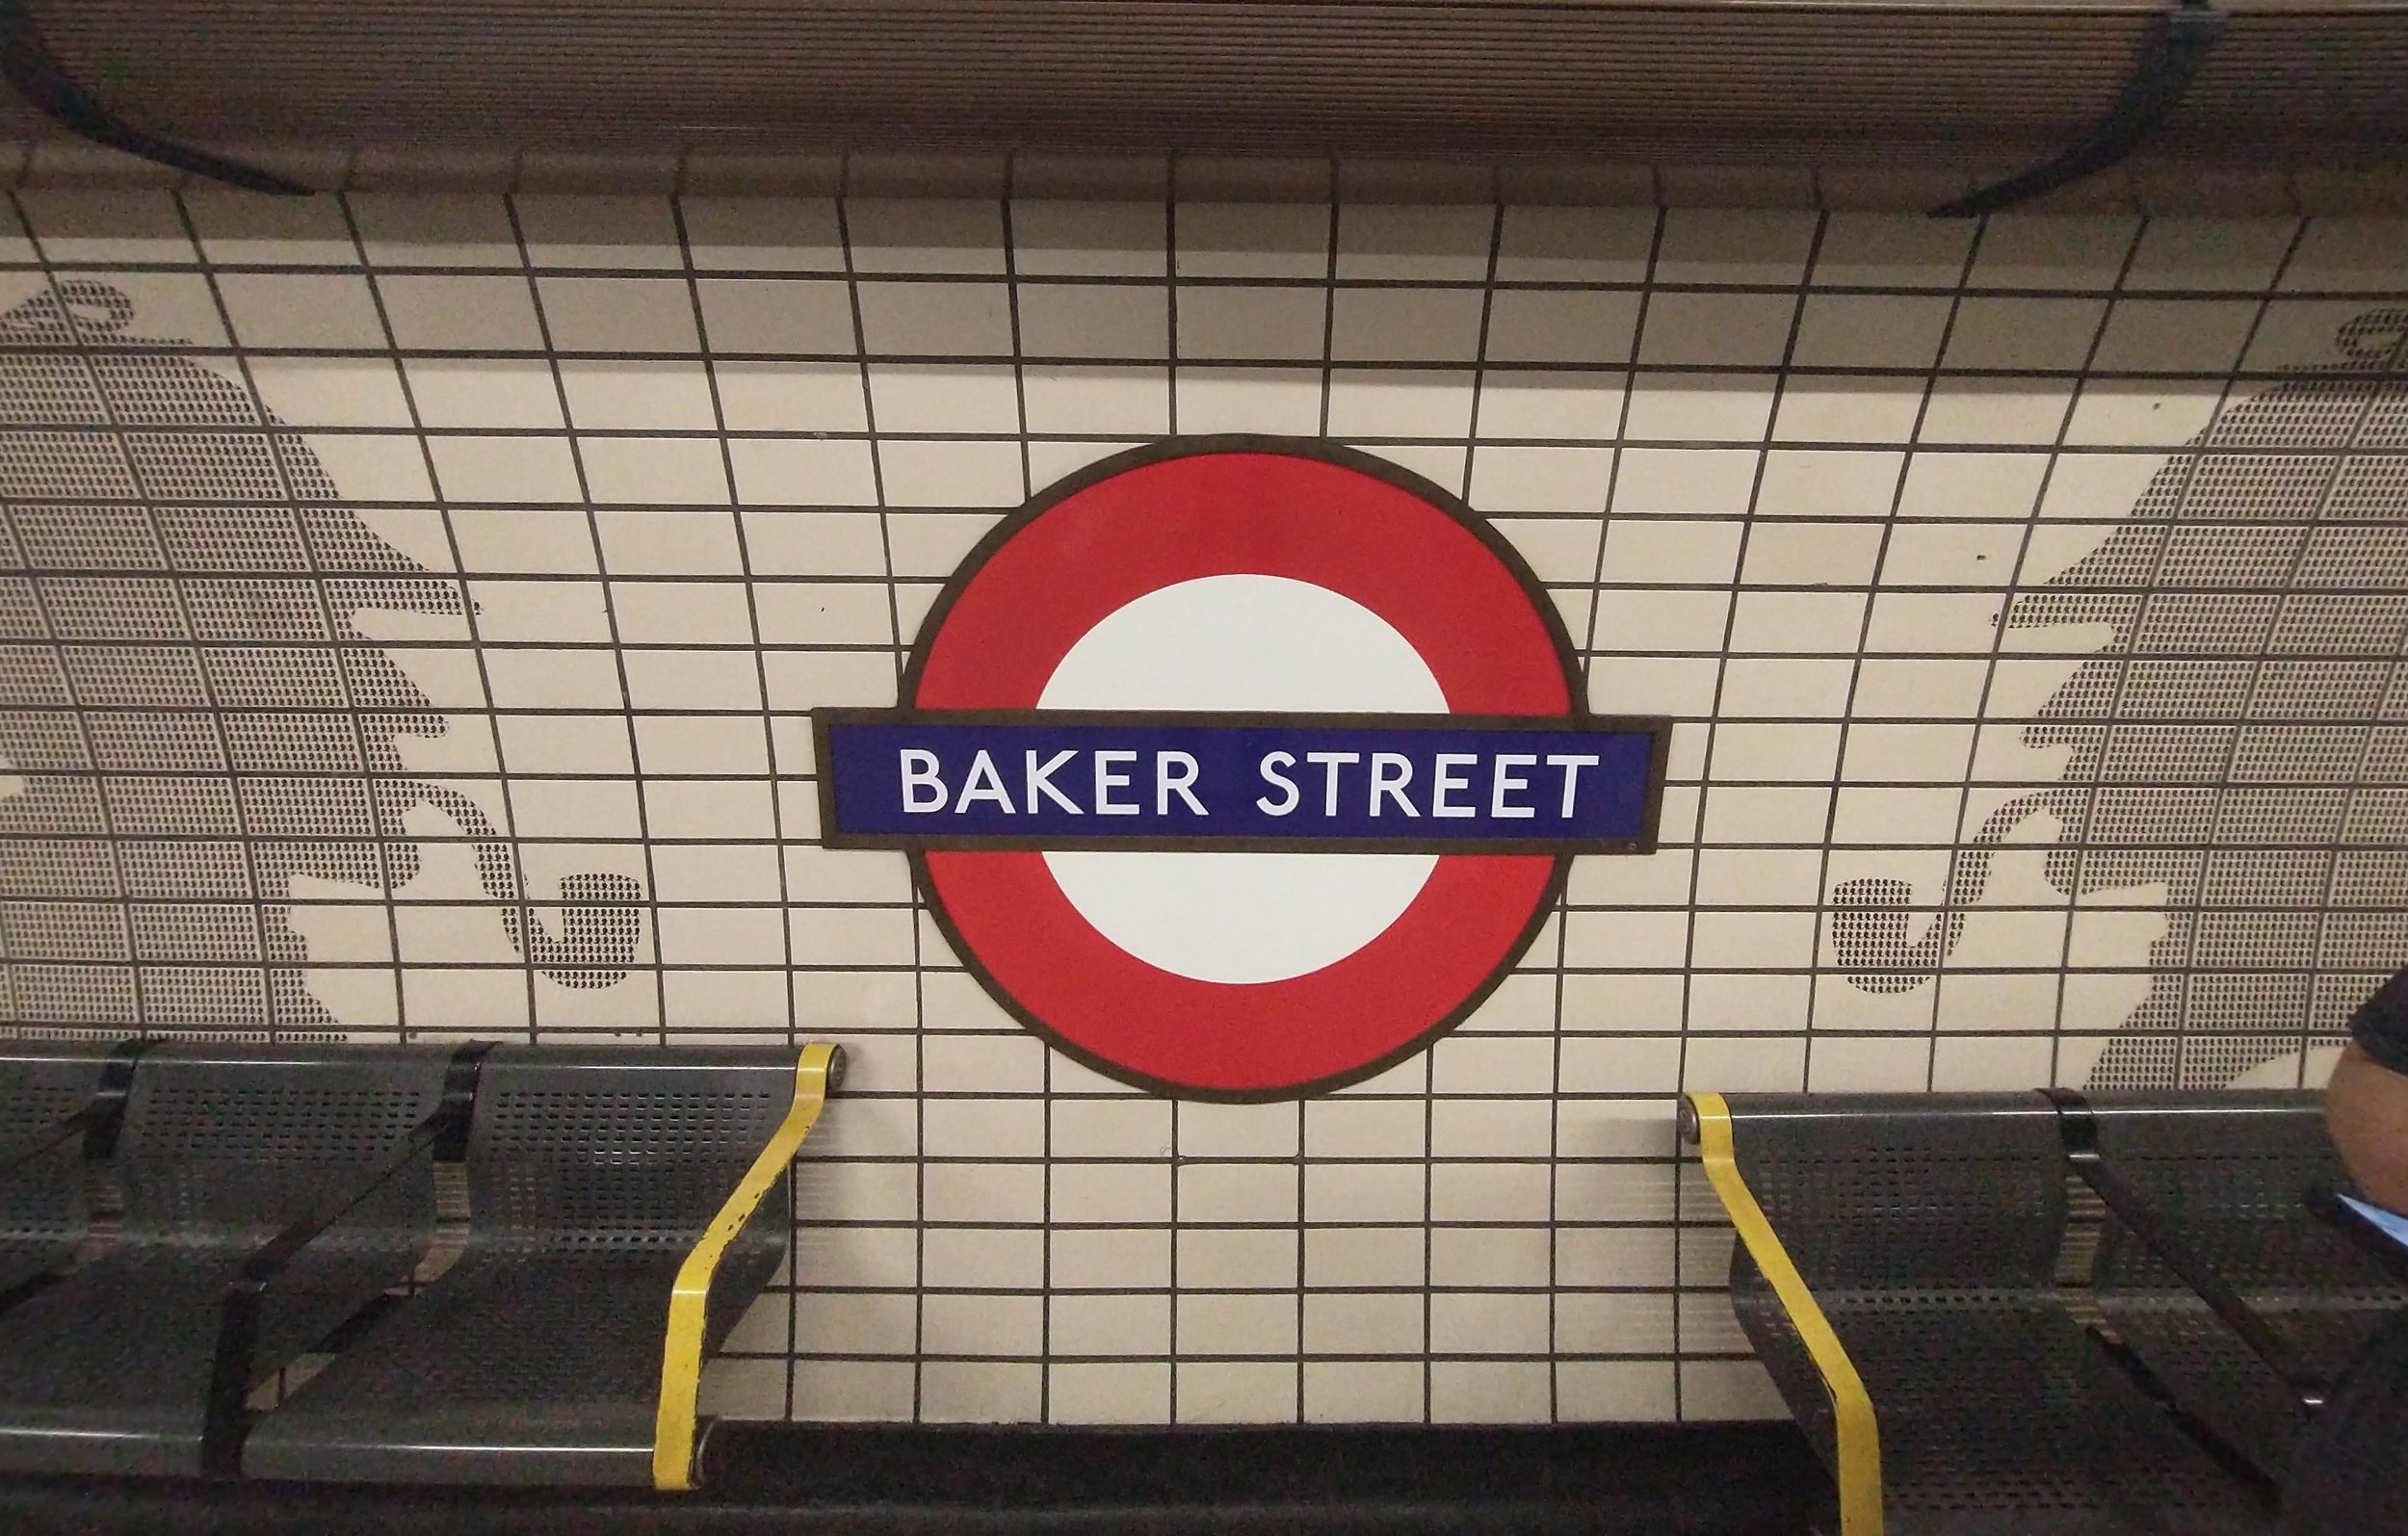 baker-street-underground-station-transport-for-london-symbol